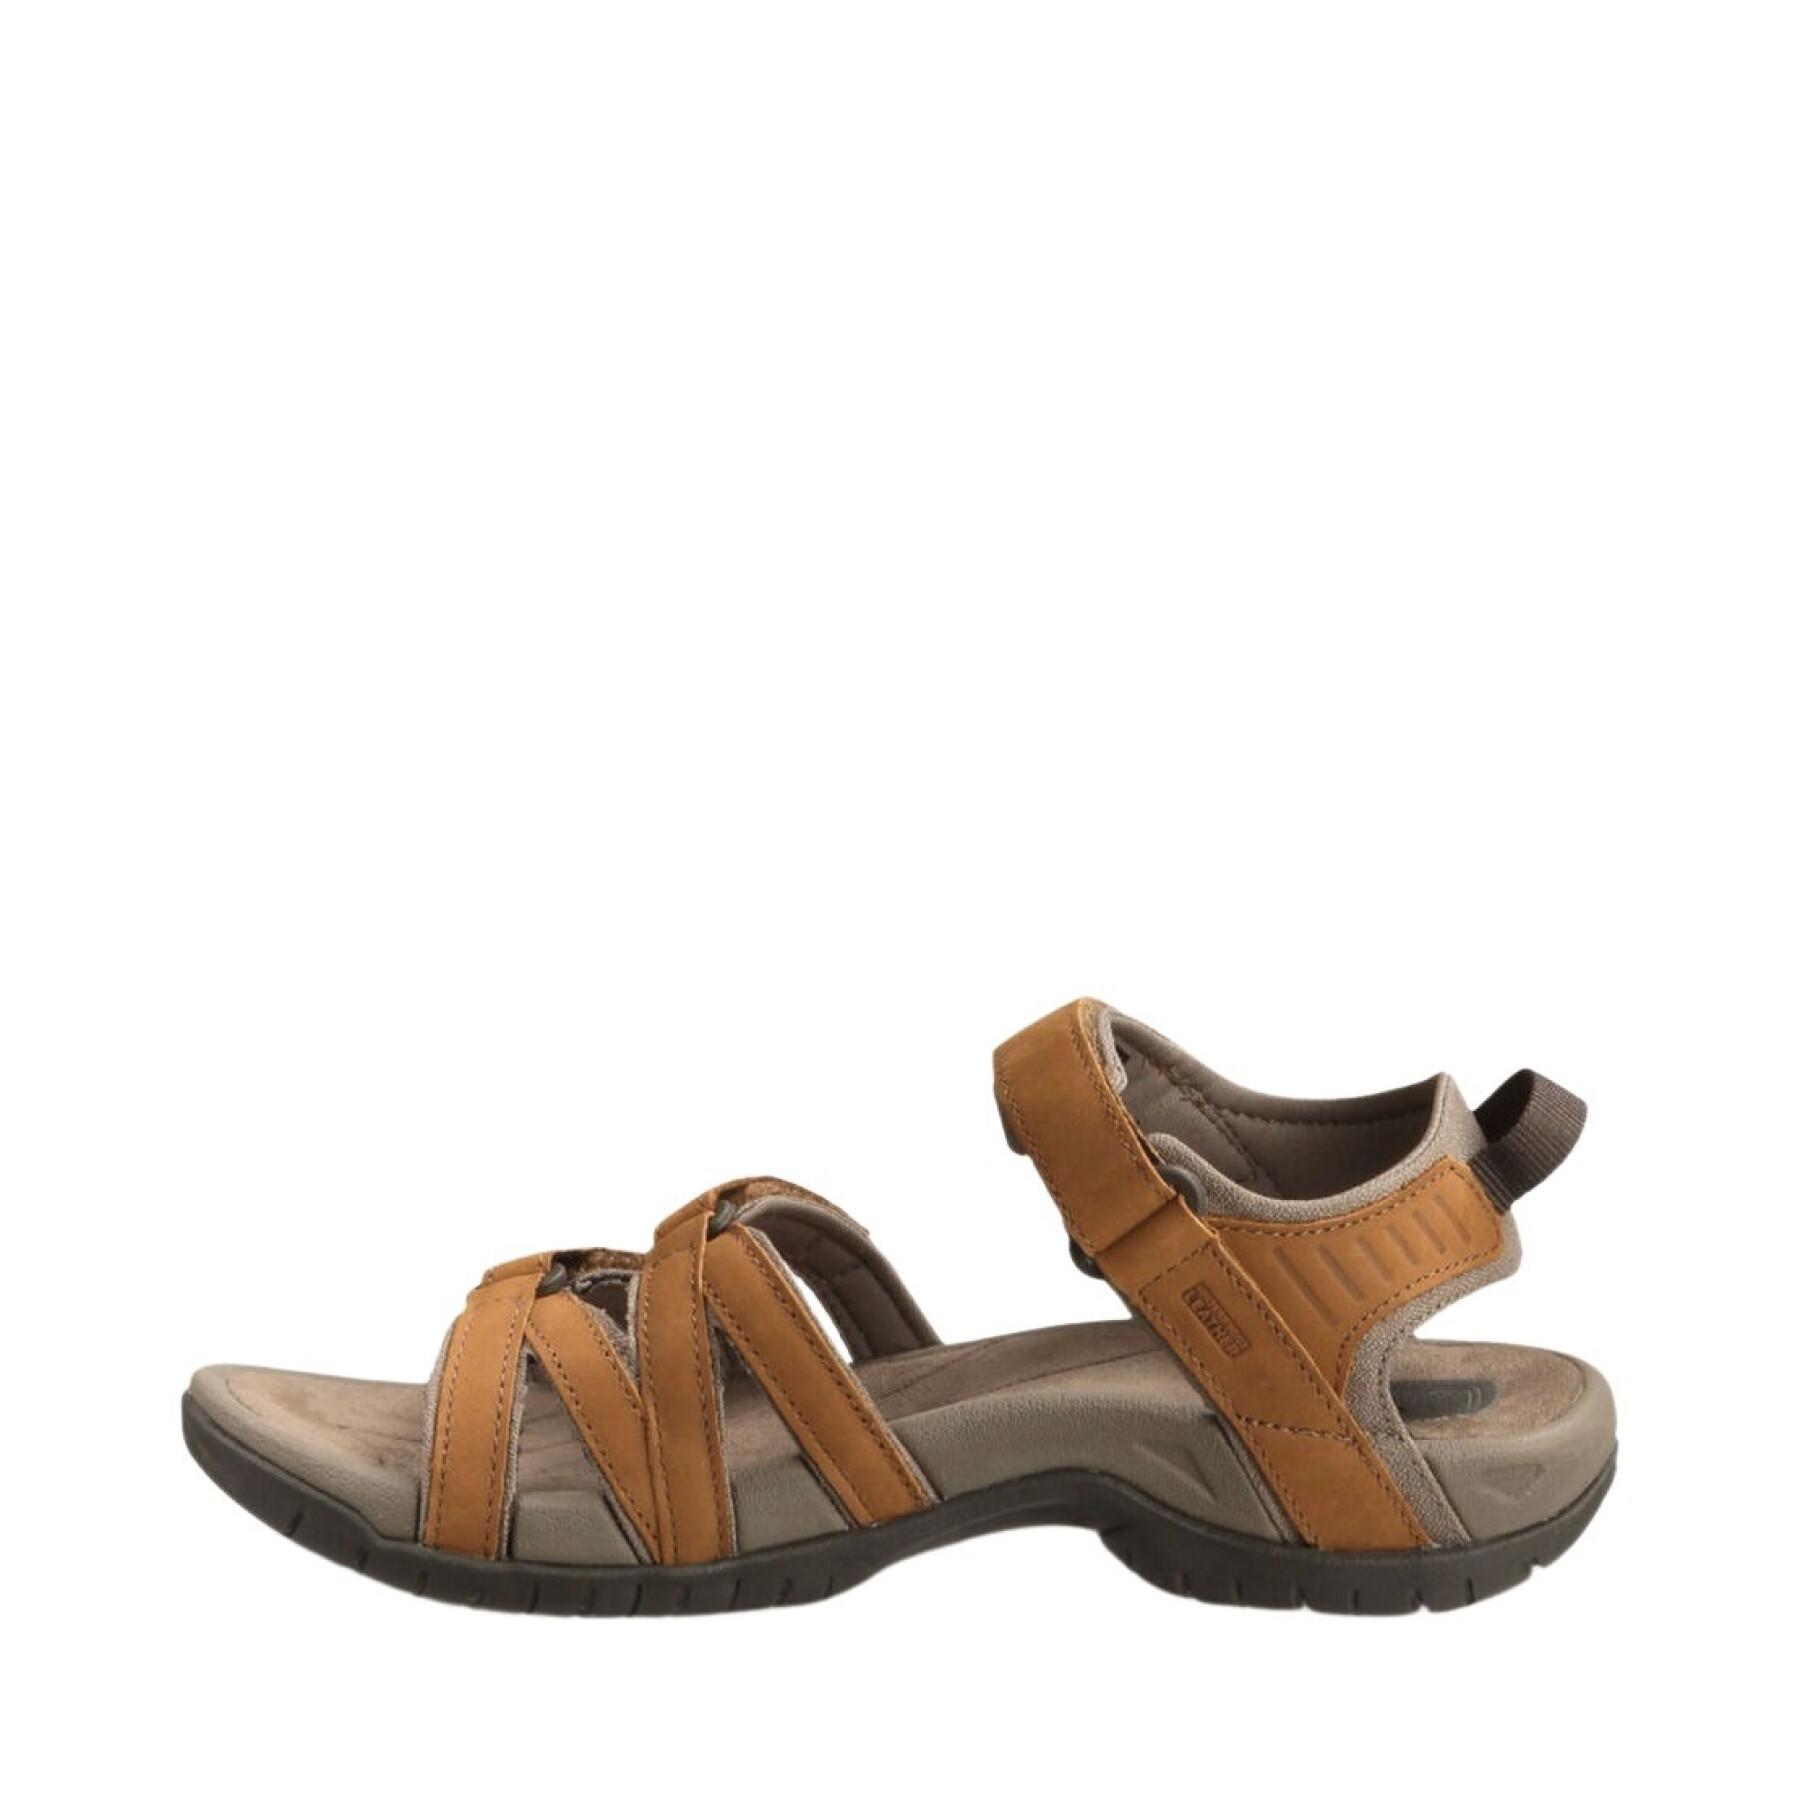 Women's sandals Teva Tirra Leather